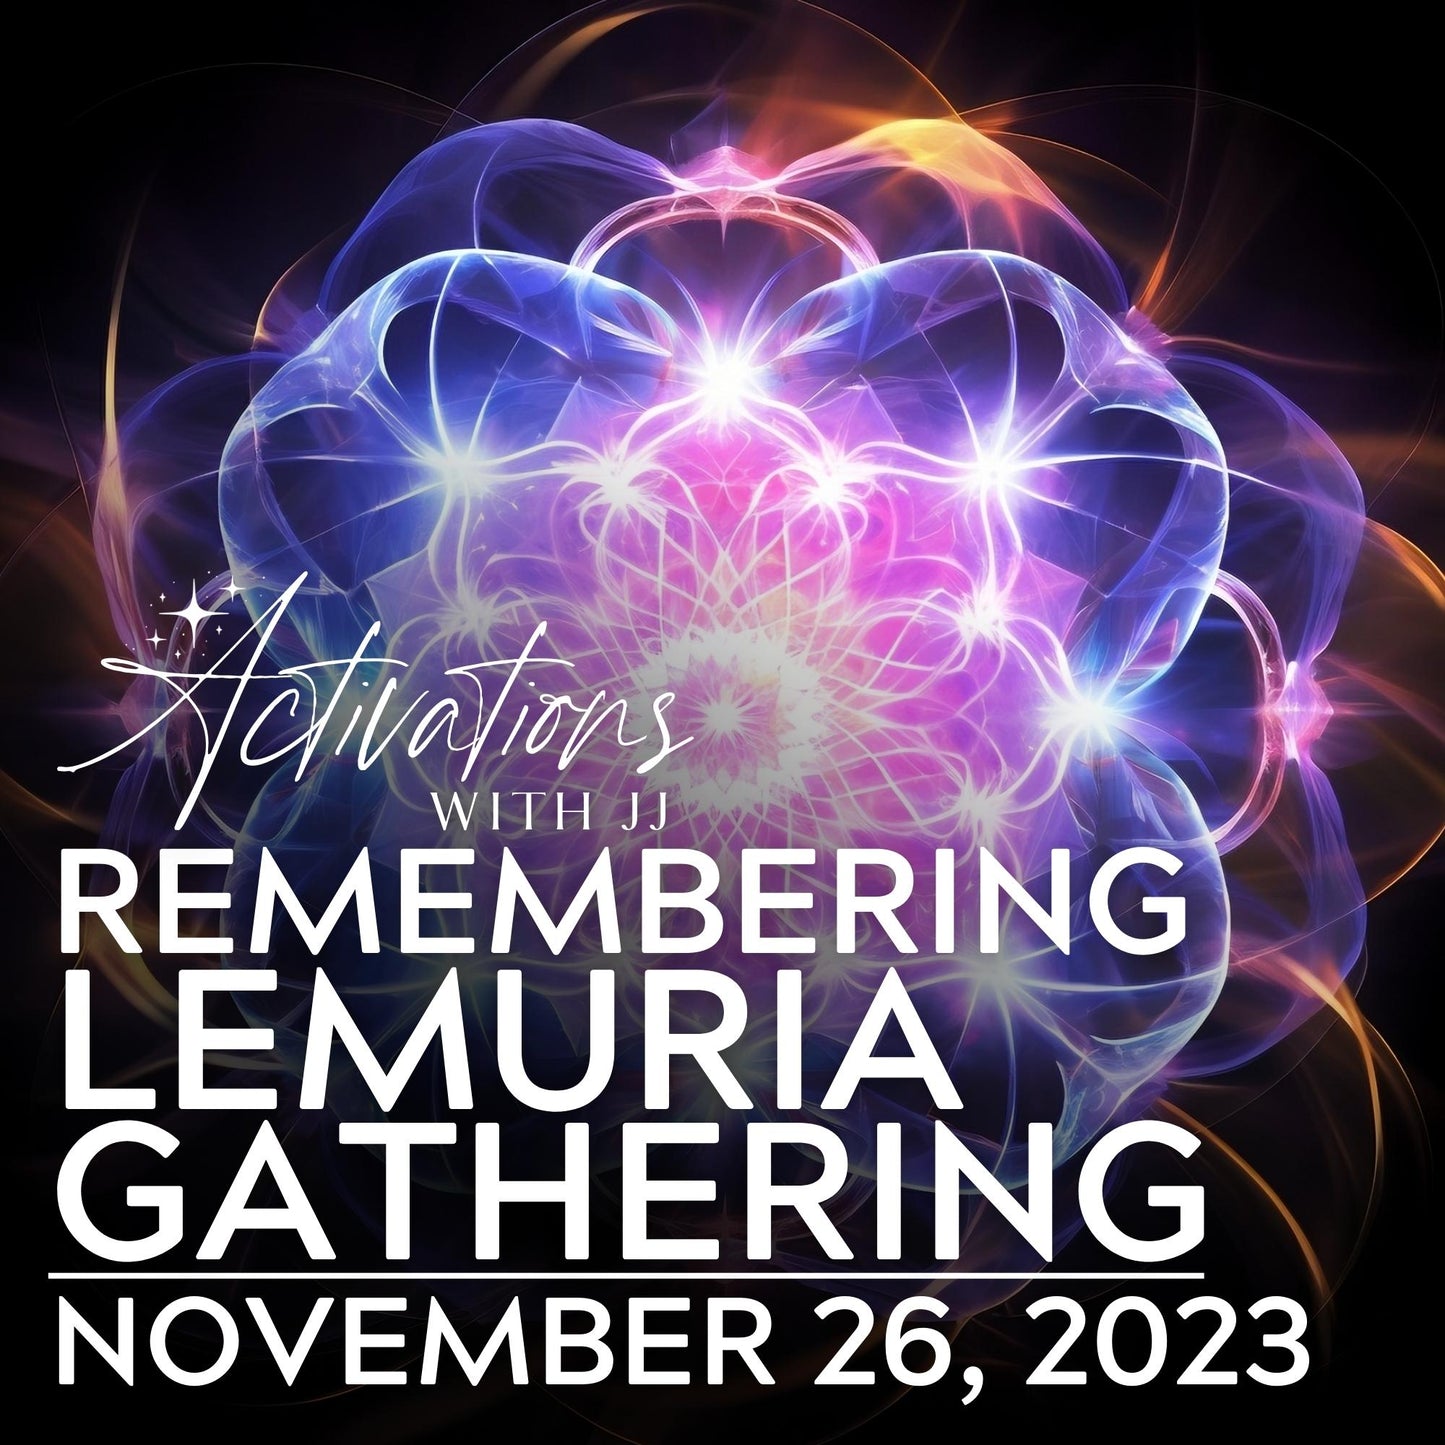 Remembering Lemuria Gathering (MP3 Recording) | November 26, 2023